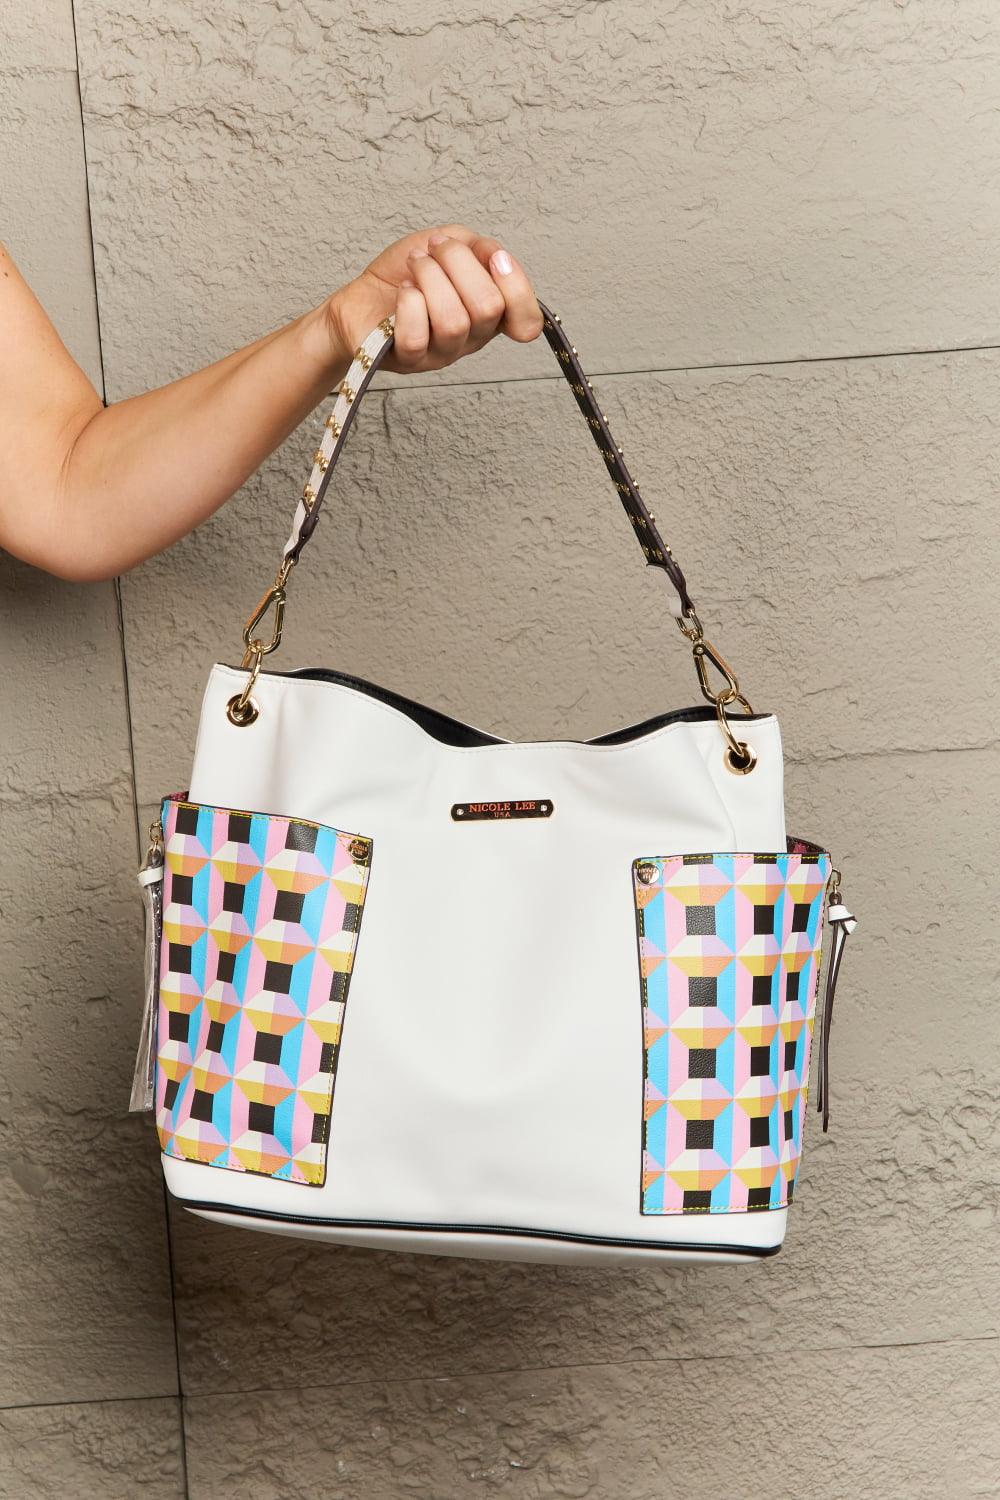 Nicole Lee USA Quihn 3-Piece Handbag Set - Lab Fashion, Home & Health